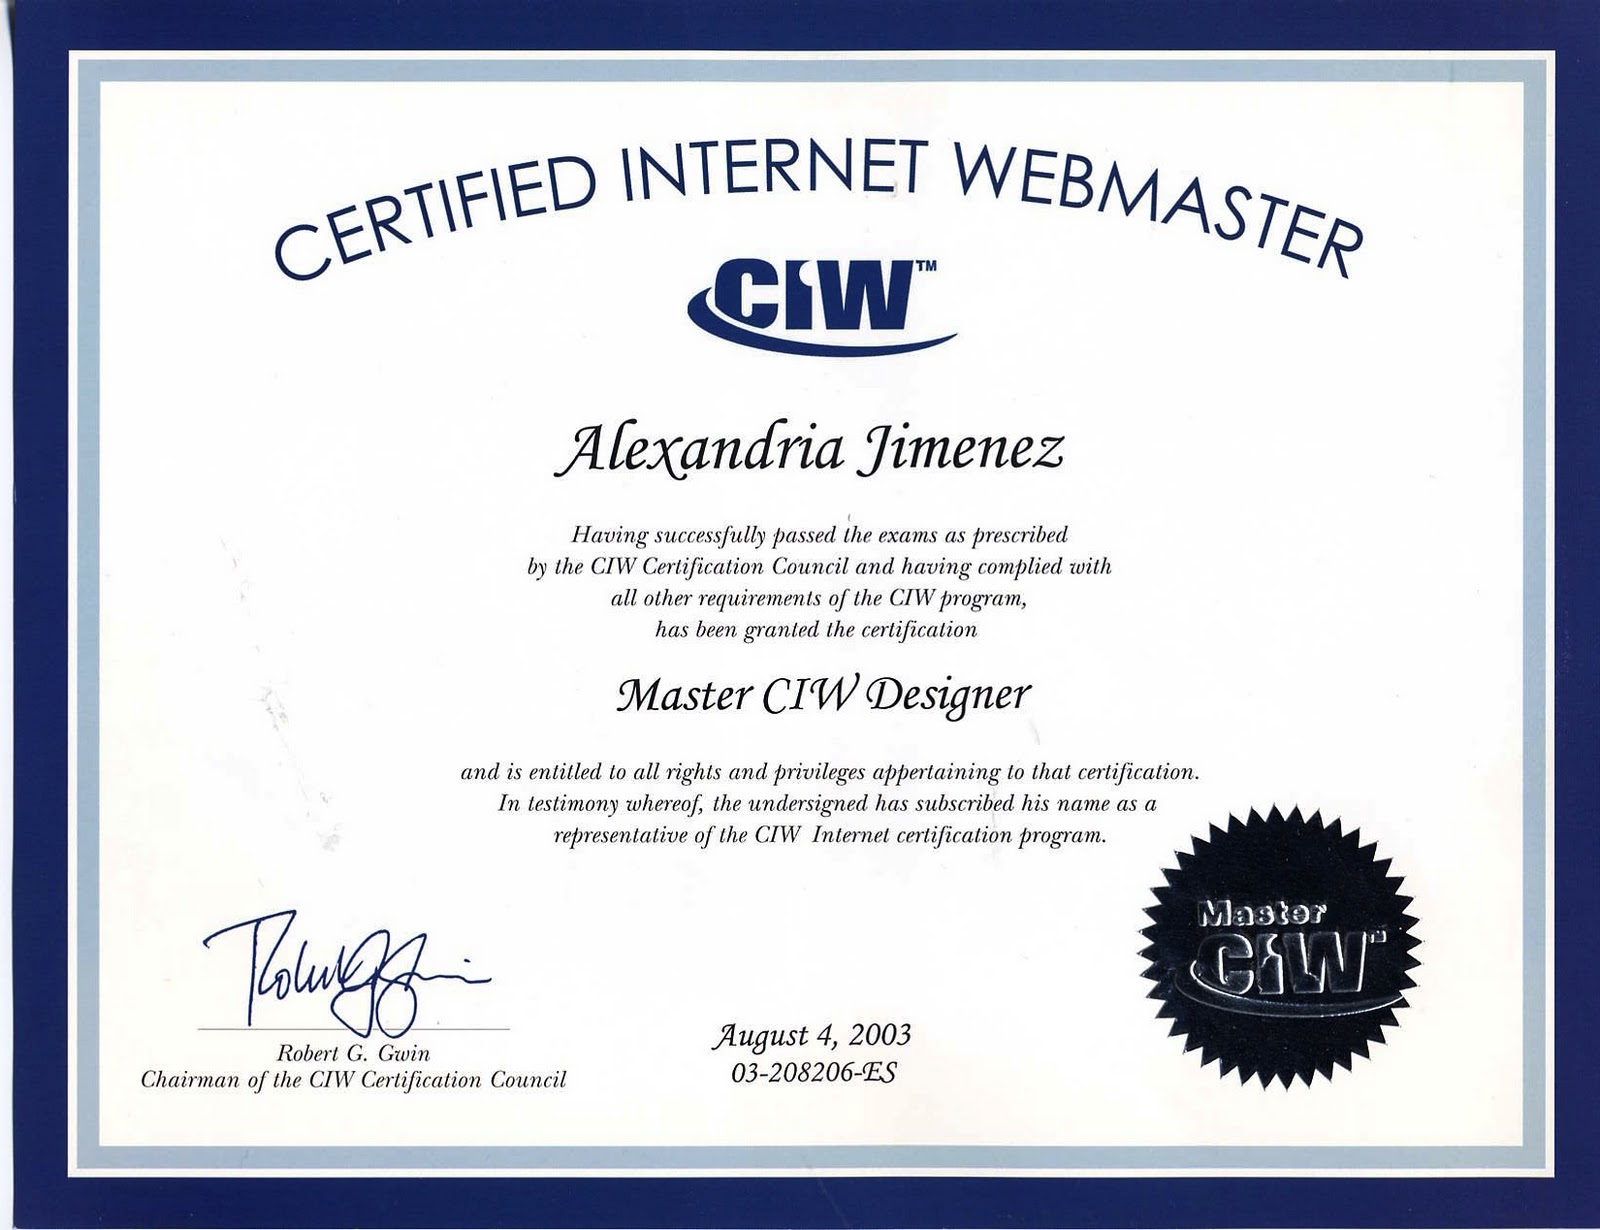 Tugas 4 - Pilih 1 Profesi IT Jimenez+-+Certified+Internet+Webmaster+Designer